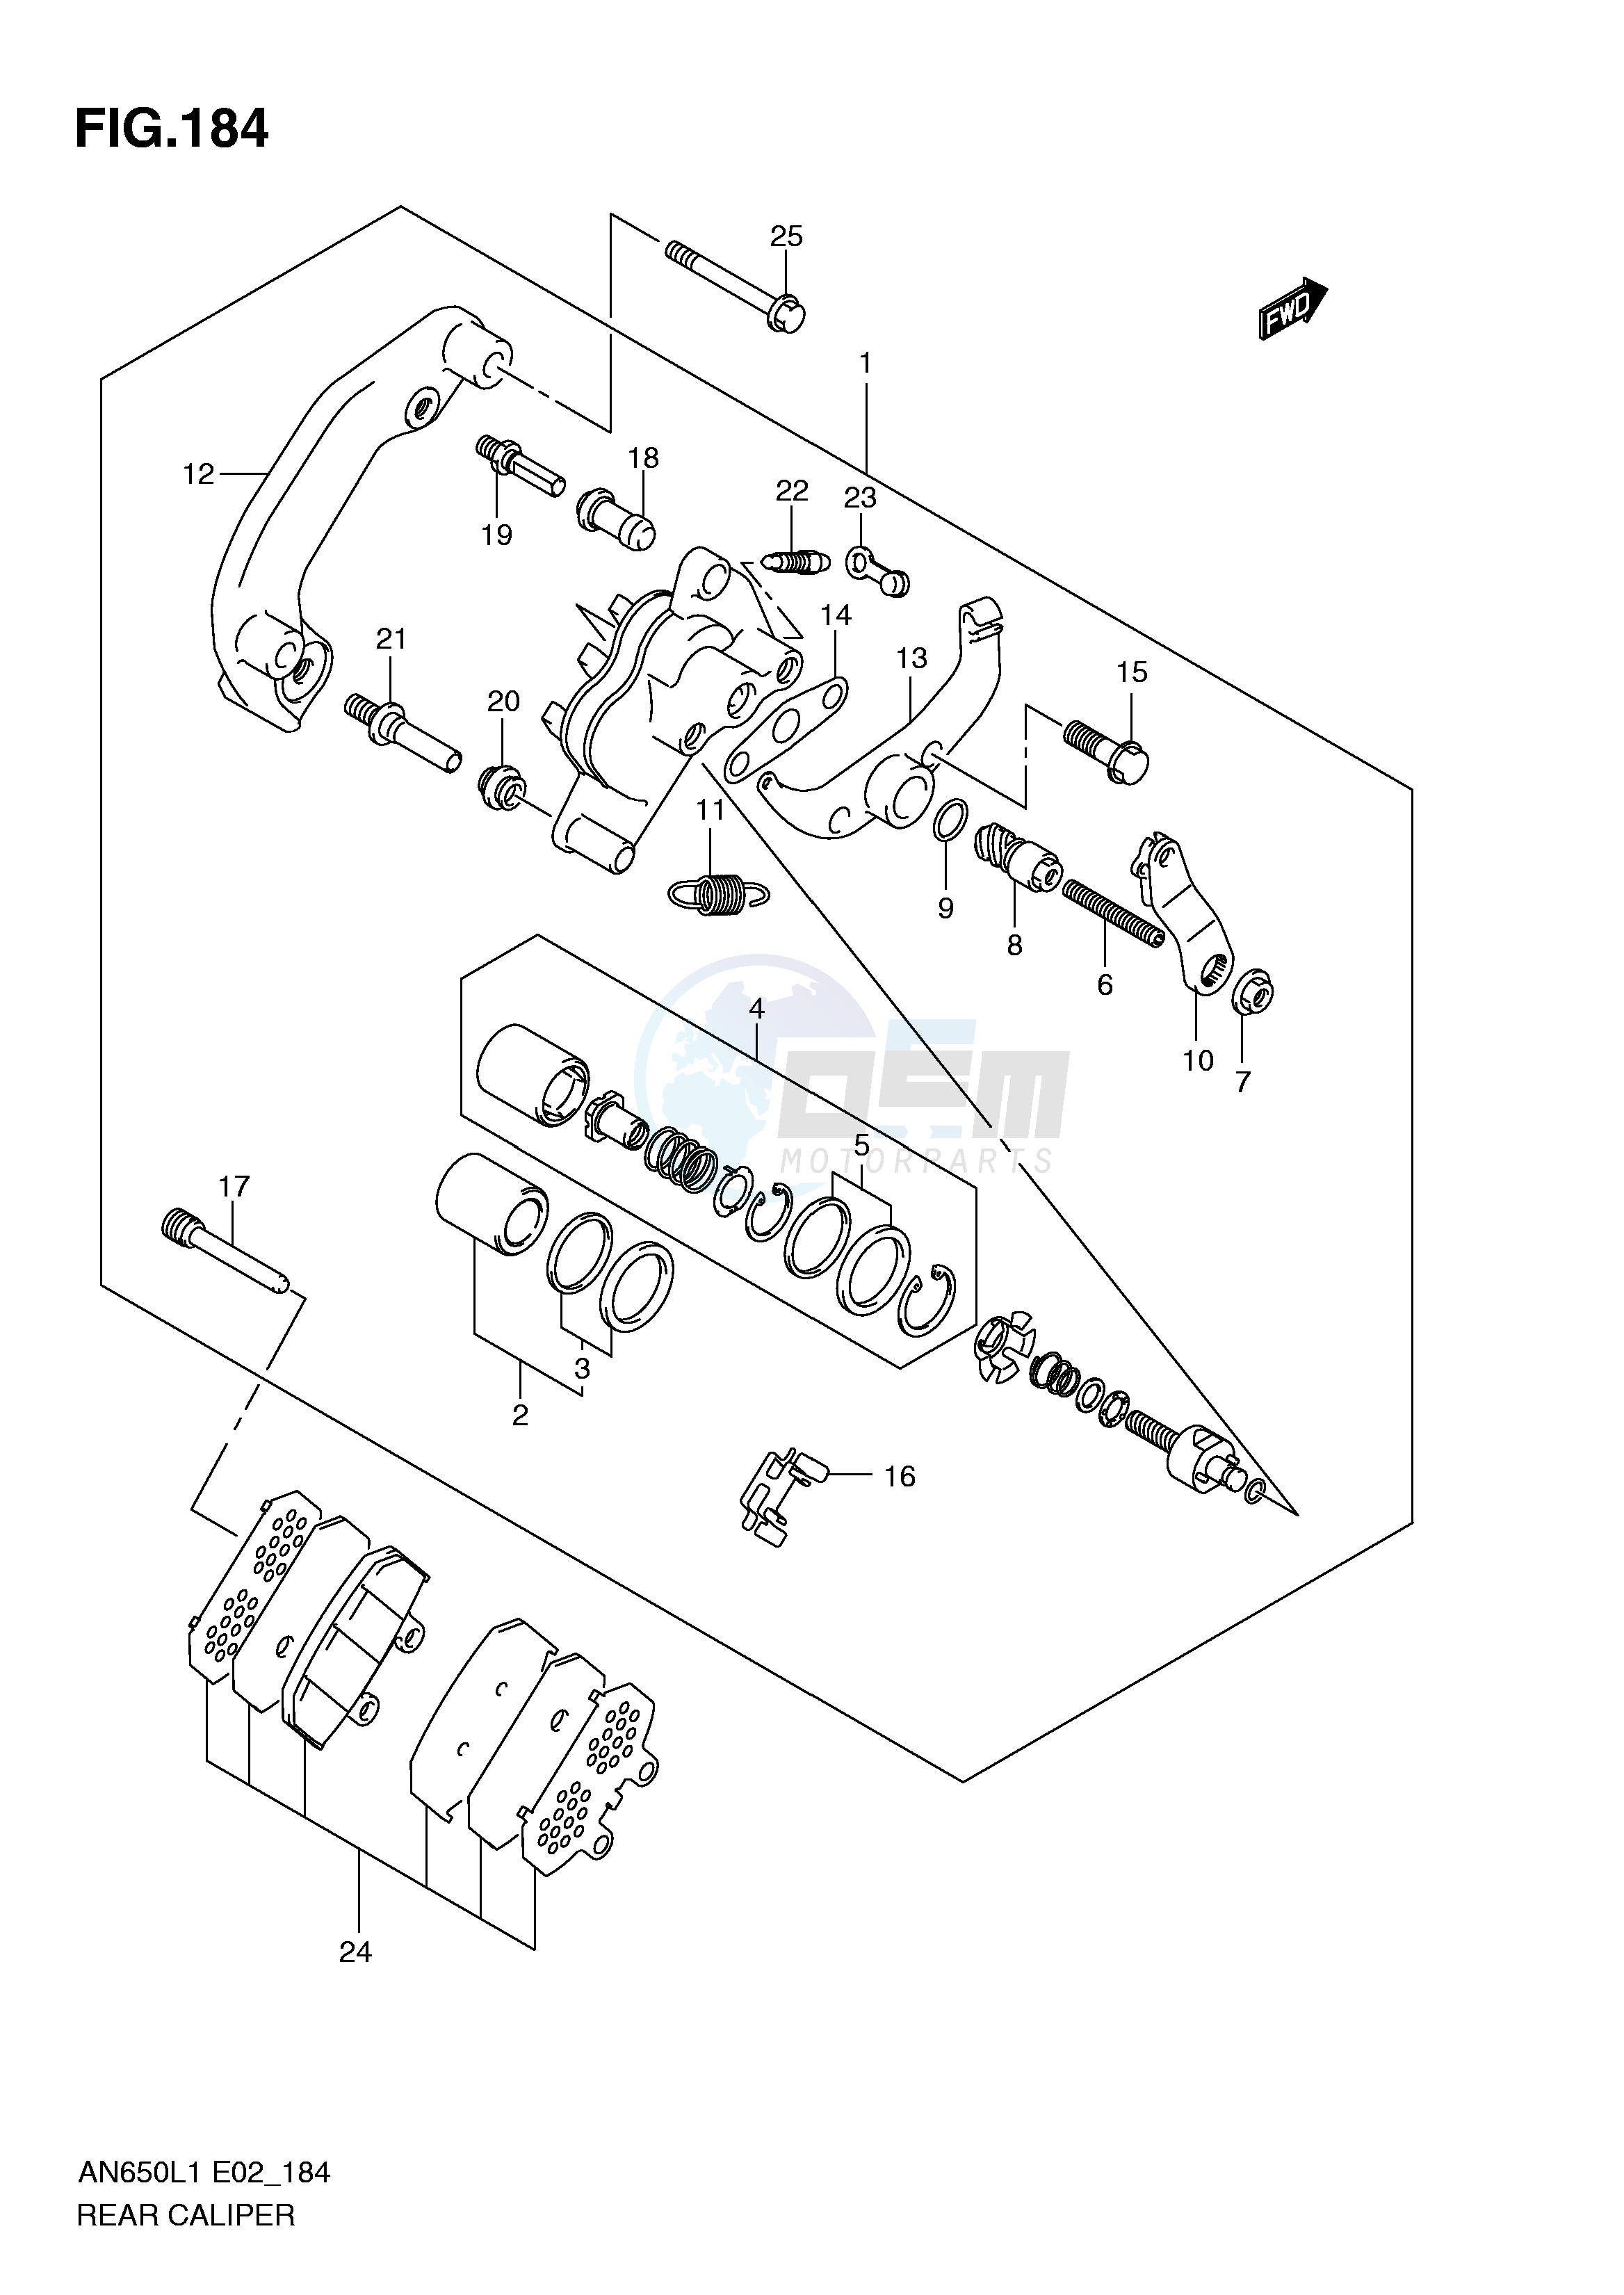 REAR CALIPER (AN650AL1 E2) blueprint